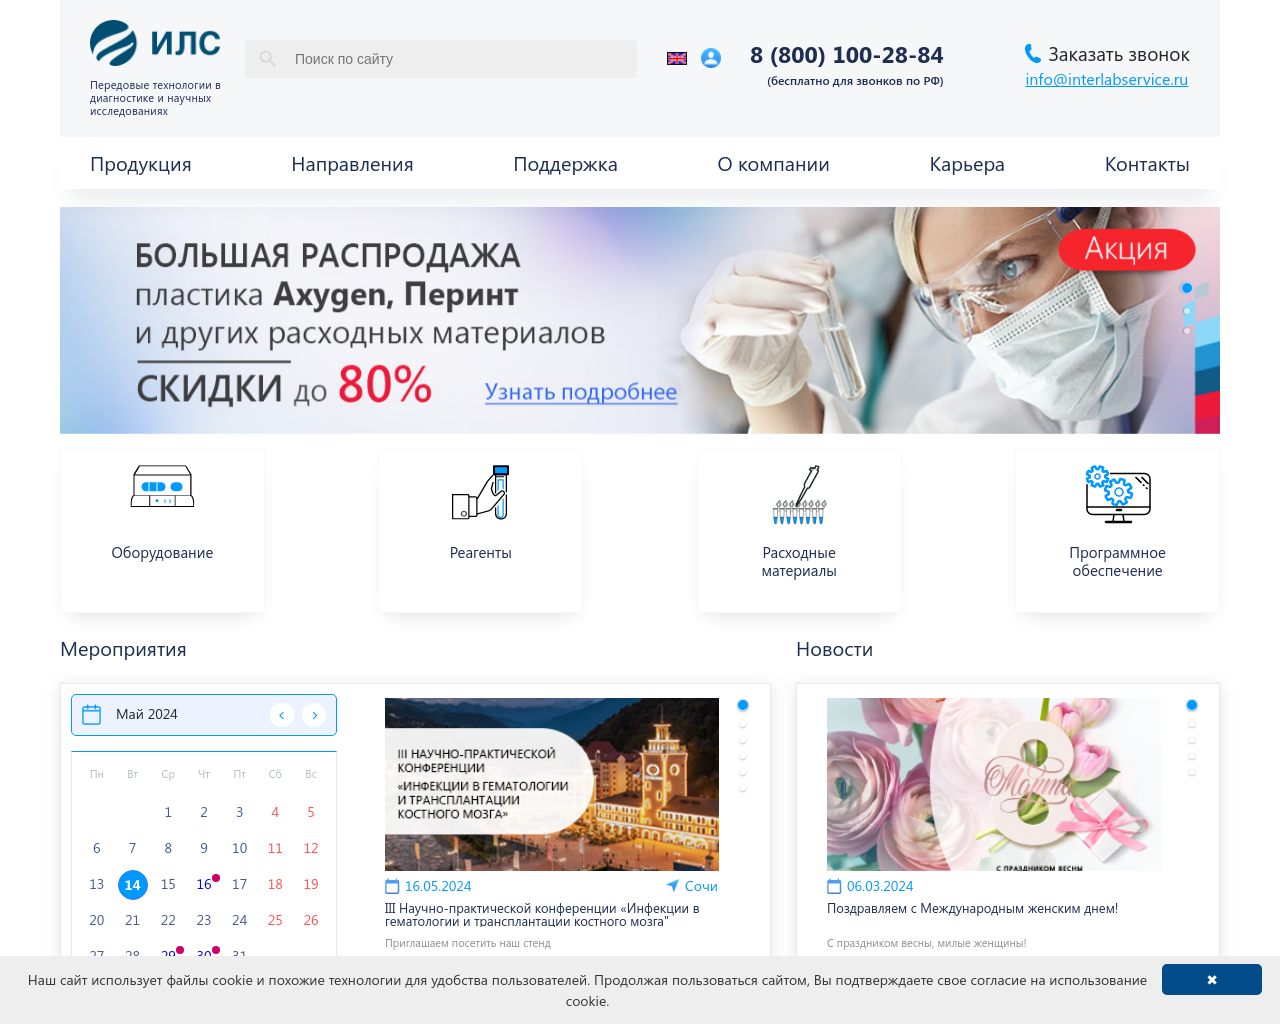 interlabservice.ru